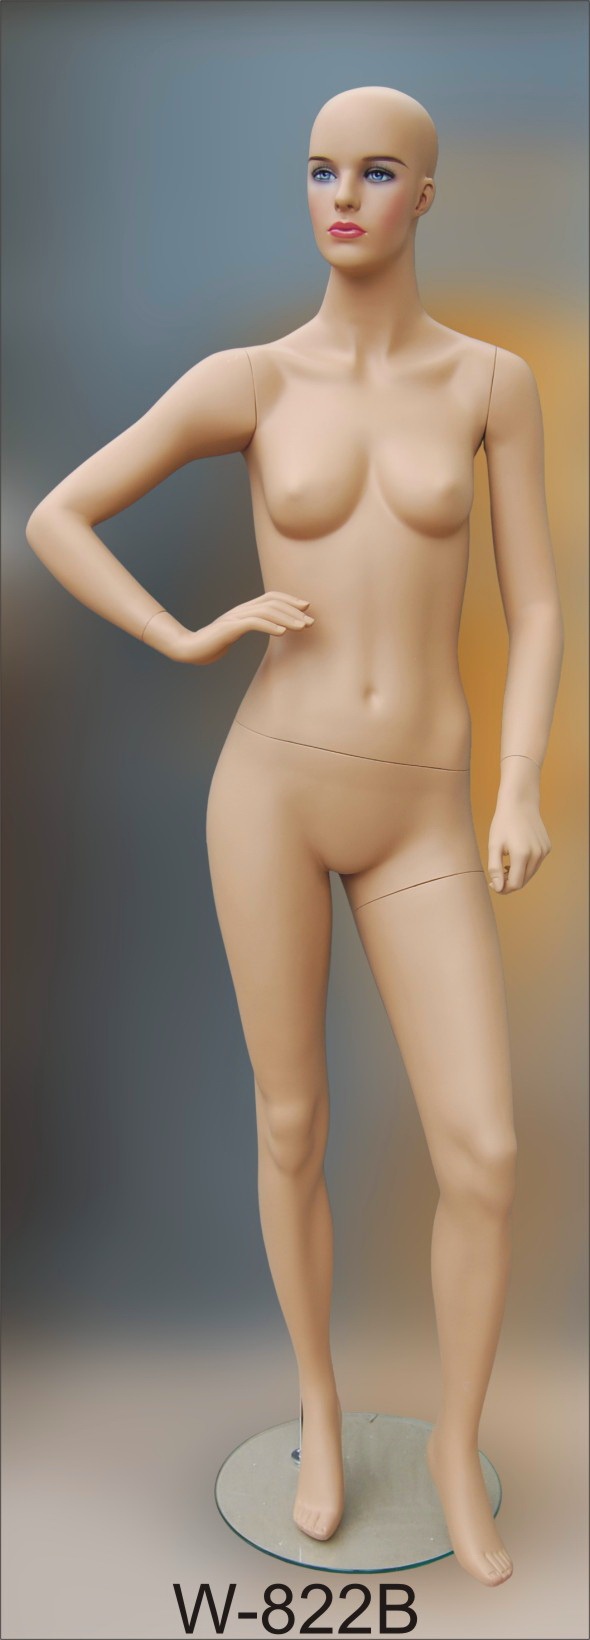 манекен женский телесный 2